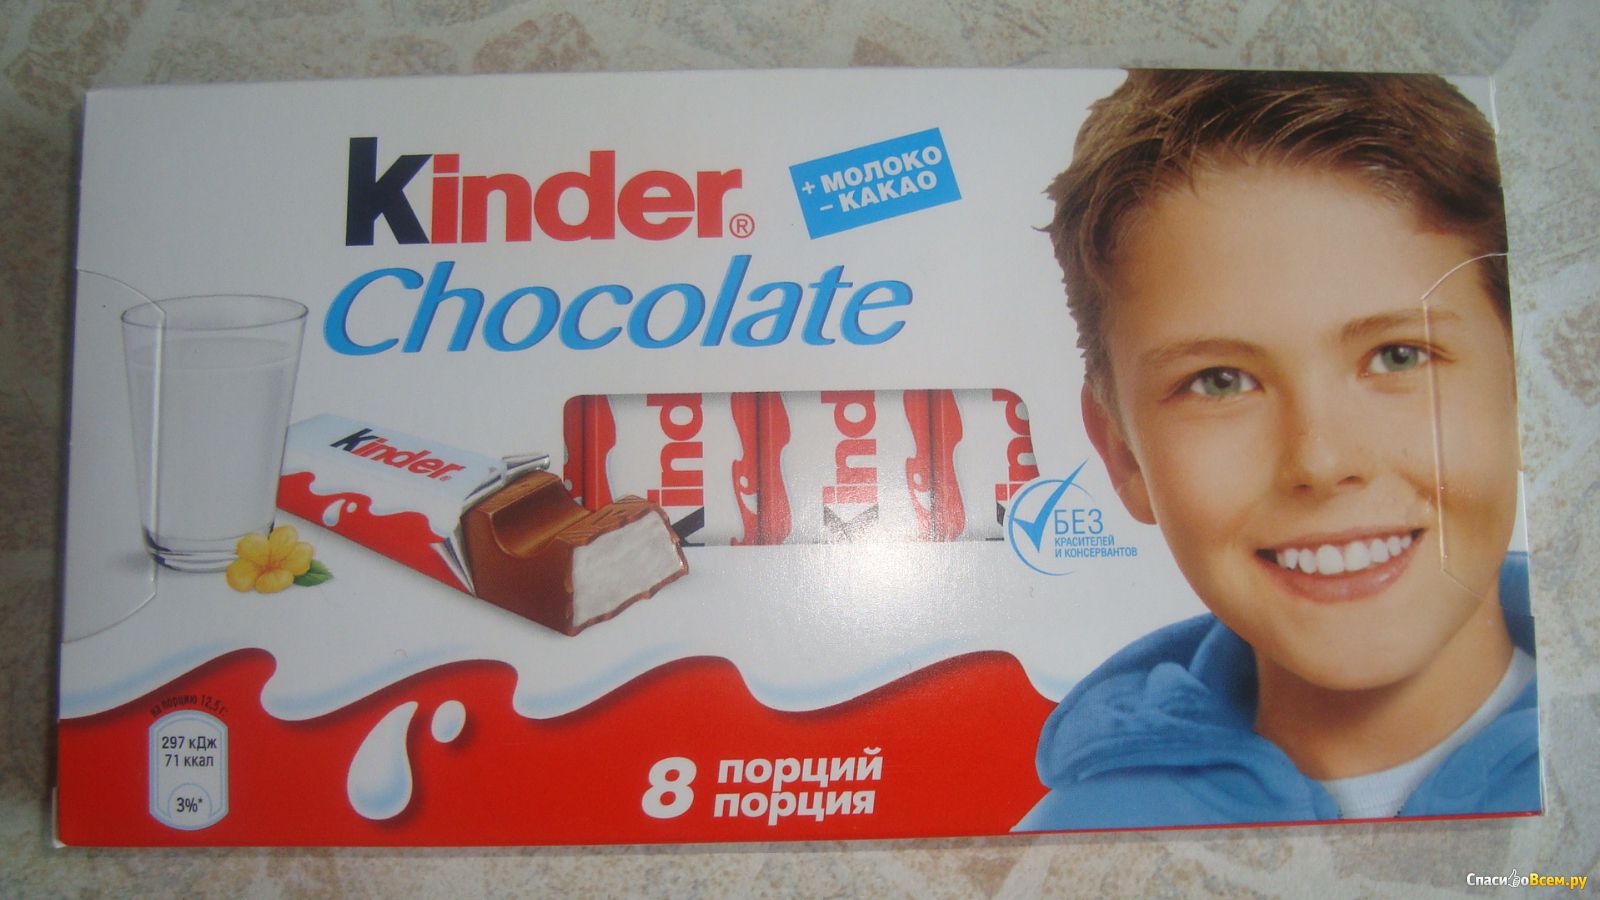 Аналог киндера. Киндер шоколад. Шоколадка Киндер. Kinder шоколад. Шоколад Киндер с молочной начинкой.